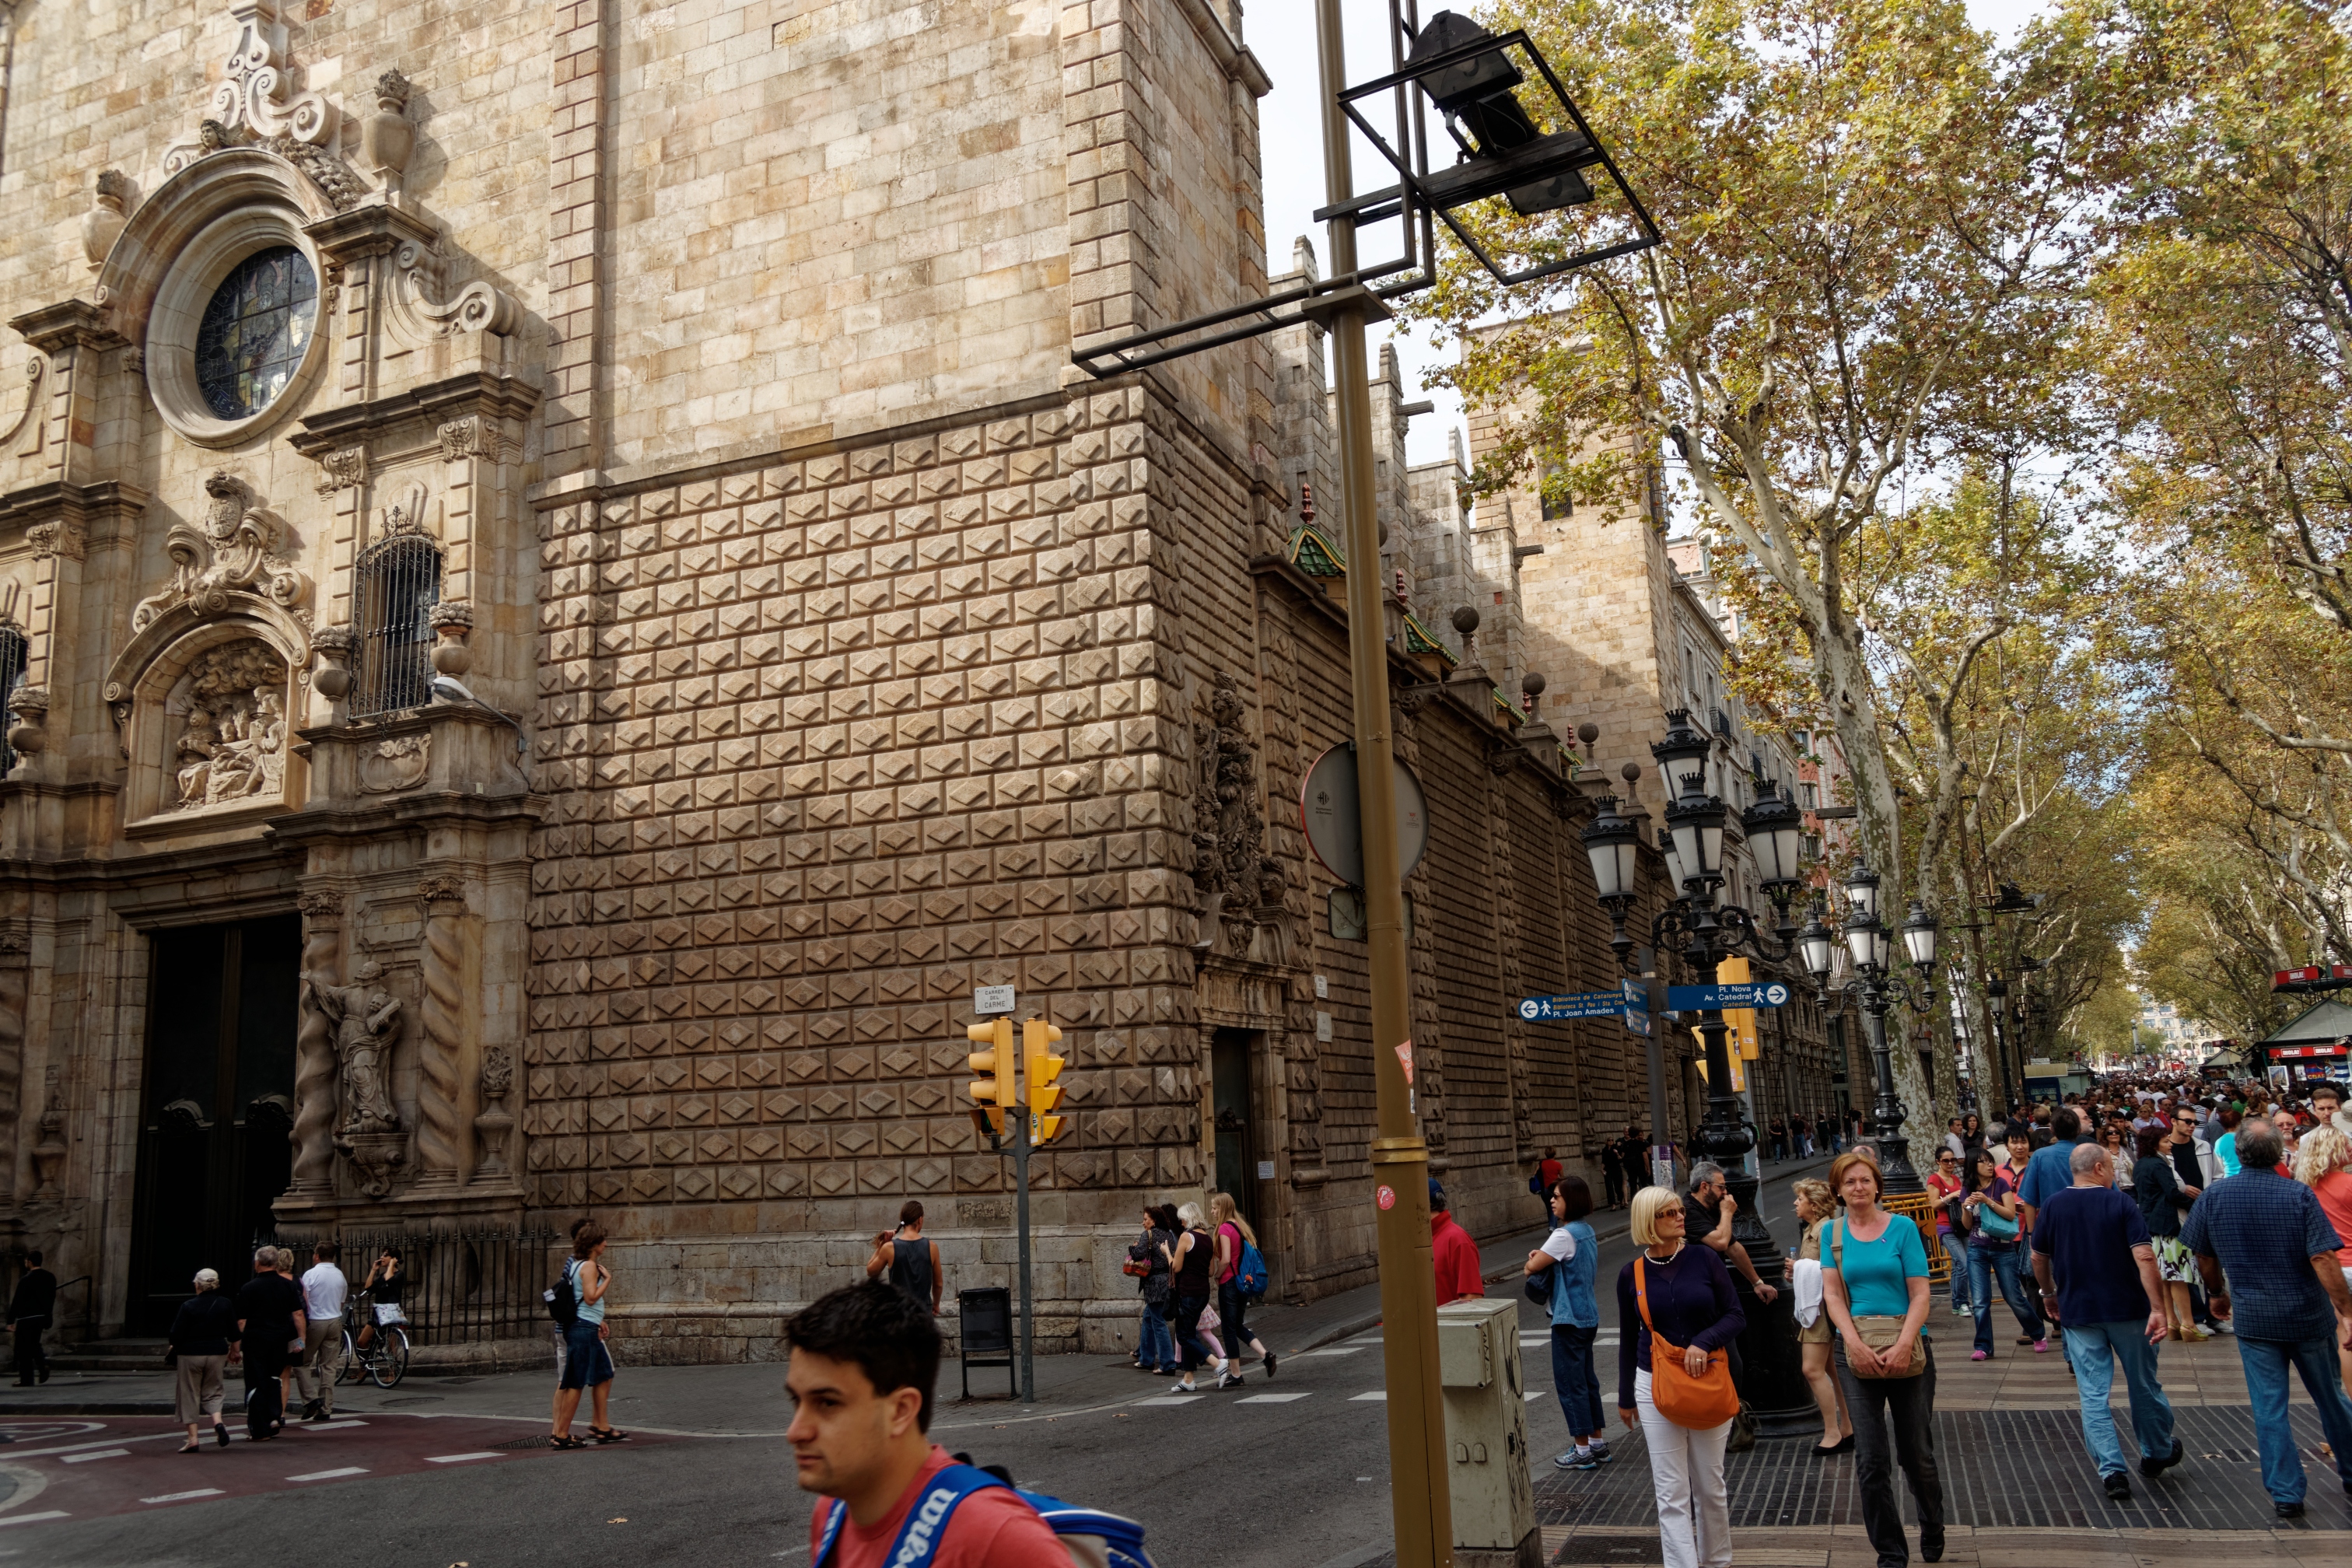 File:Barcelona - Rambla dels Estudis - View NW on Església de Betlem (Bethlehem Church) 1680 - Interior destroyed during Spanish Civil War 1936.jpg - Wikimedia Commons